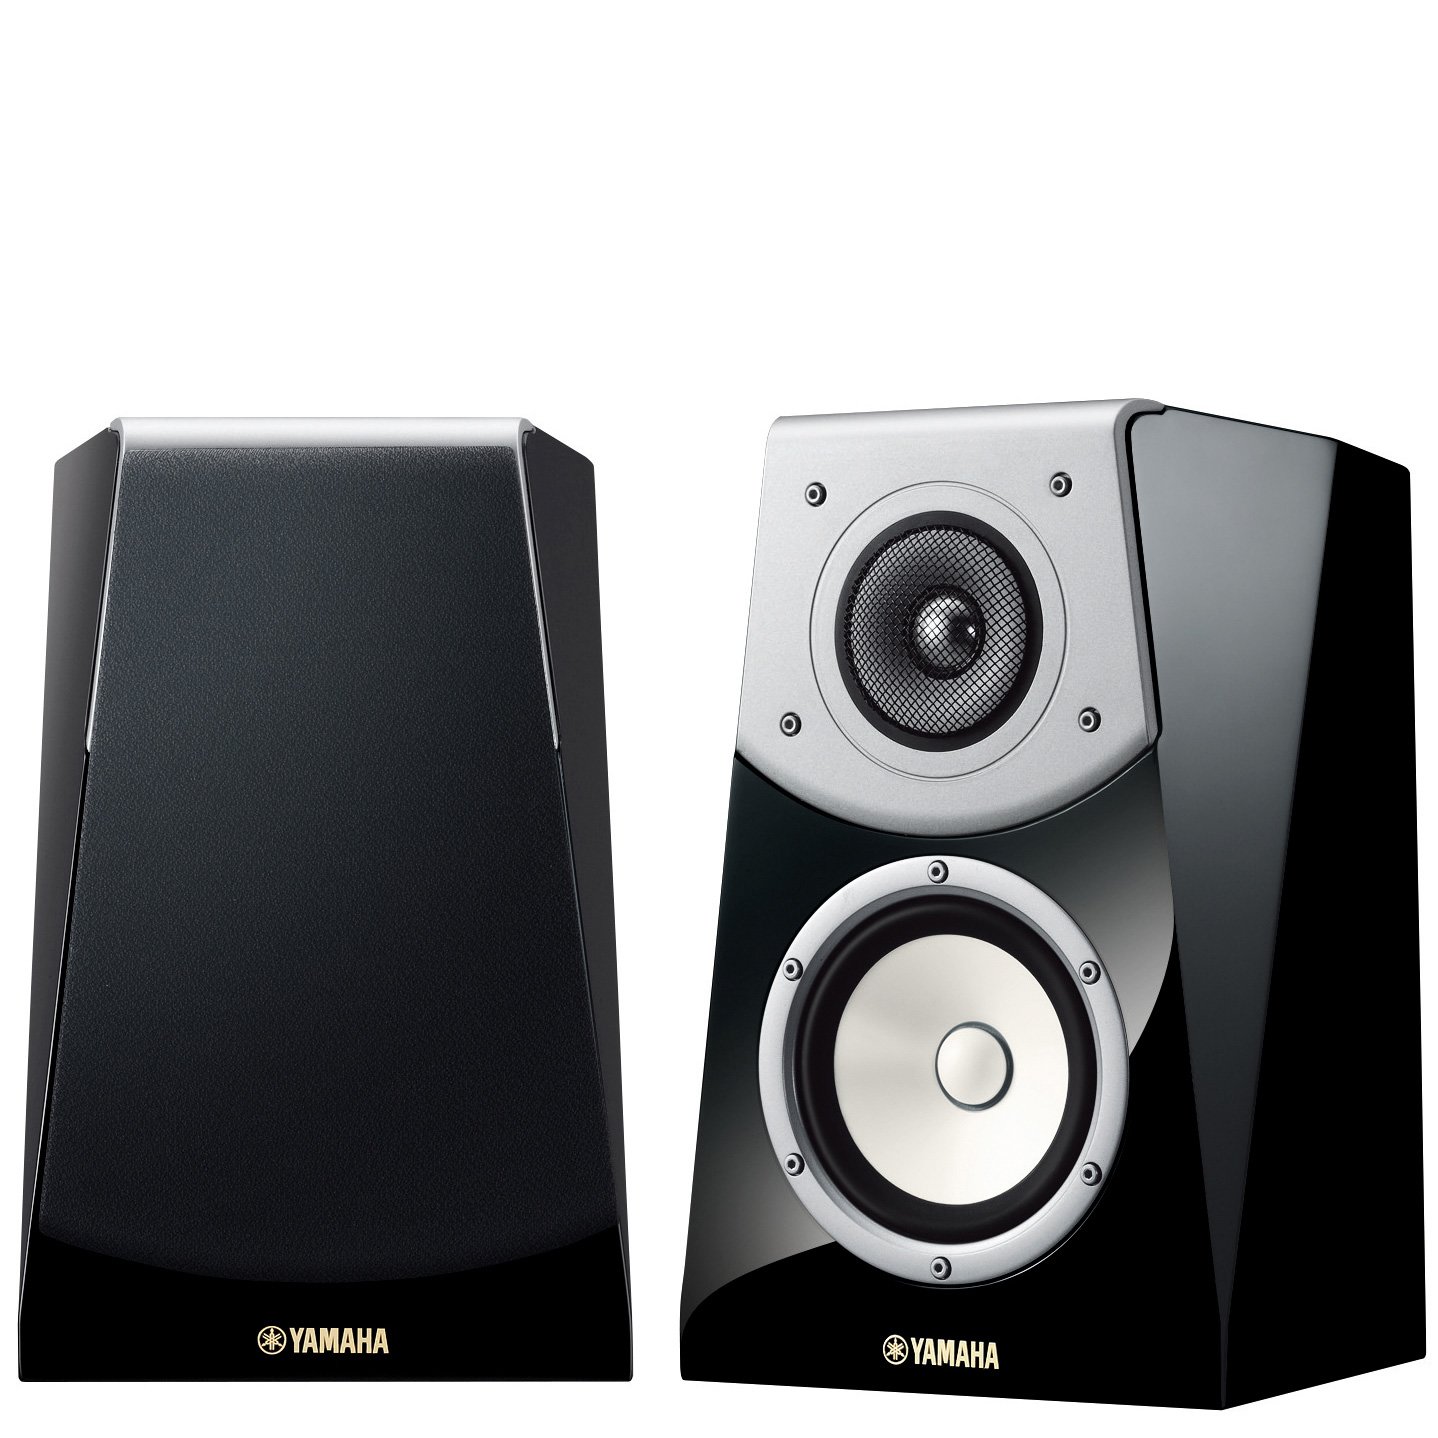 B black NS-B500 1 Yamaha NS-500 series Bookshelf speaker hires sound support